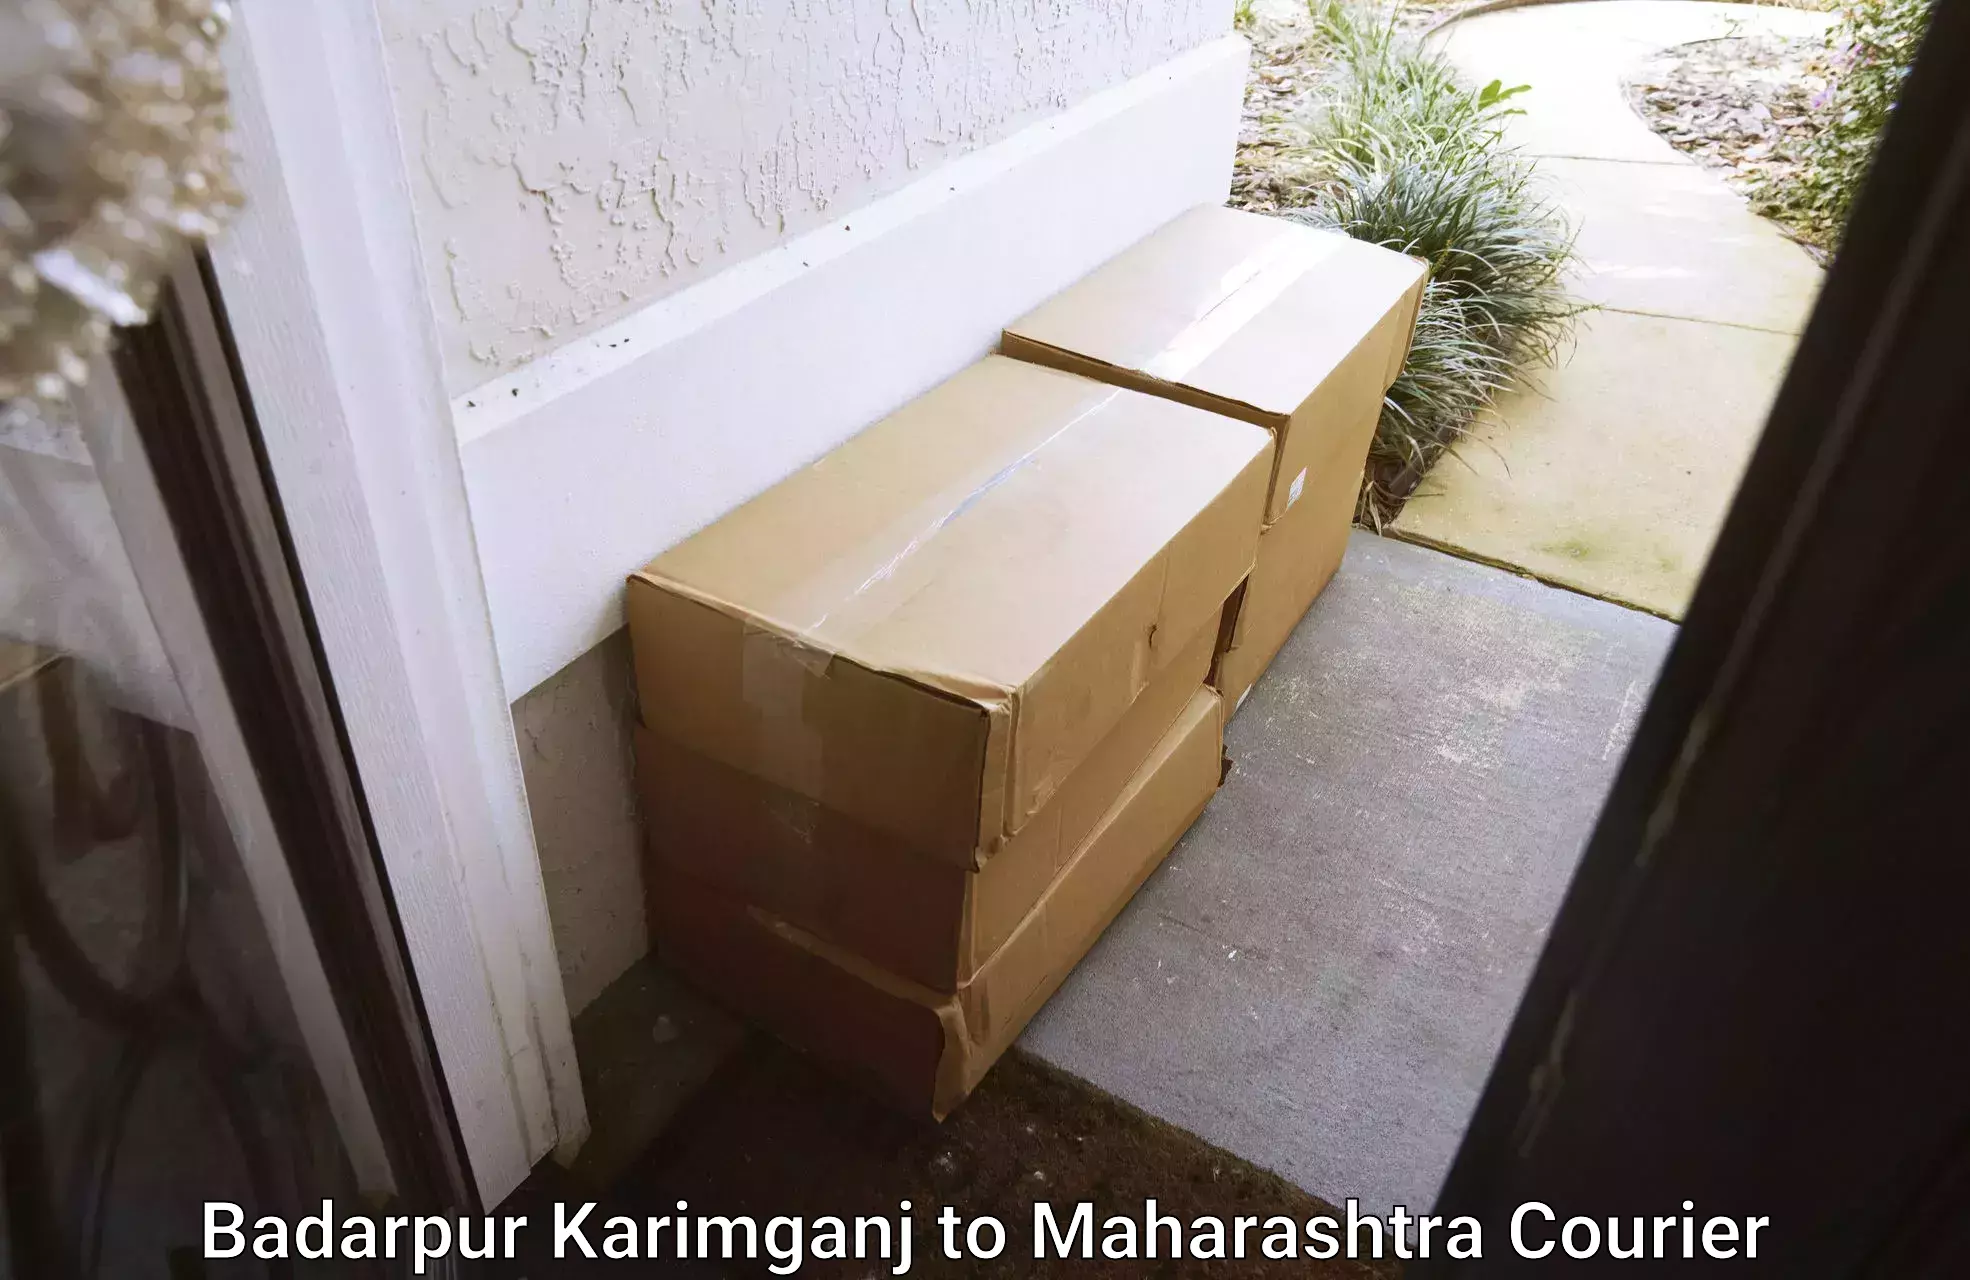 Custom courier packaging Badarpur Karimganj to Dadar